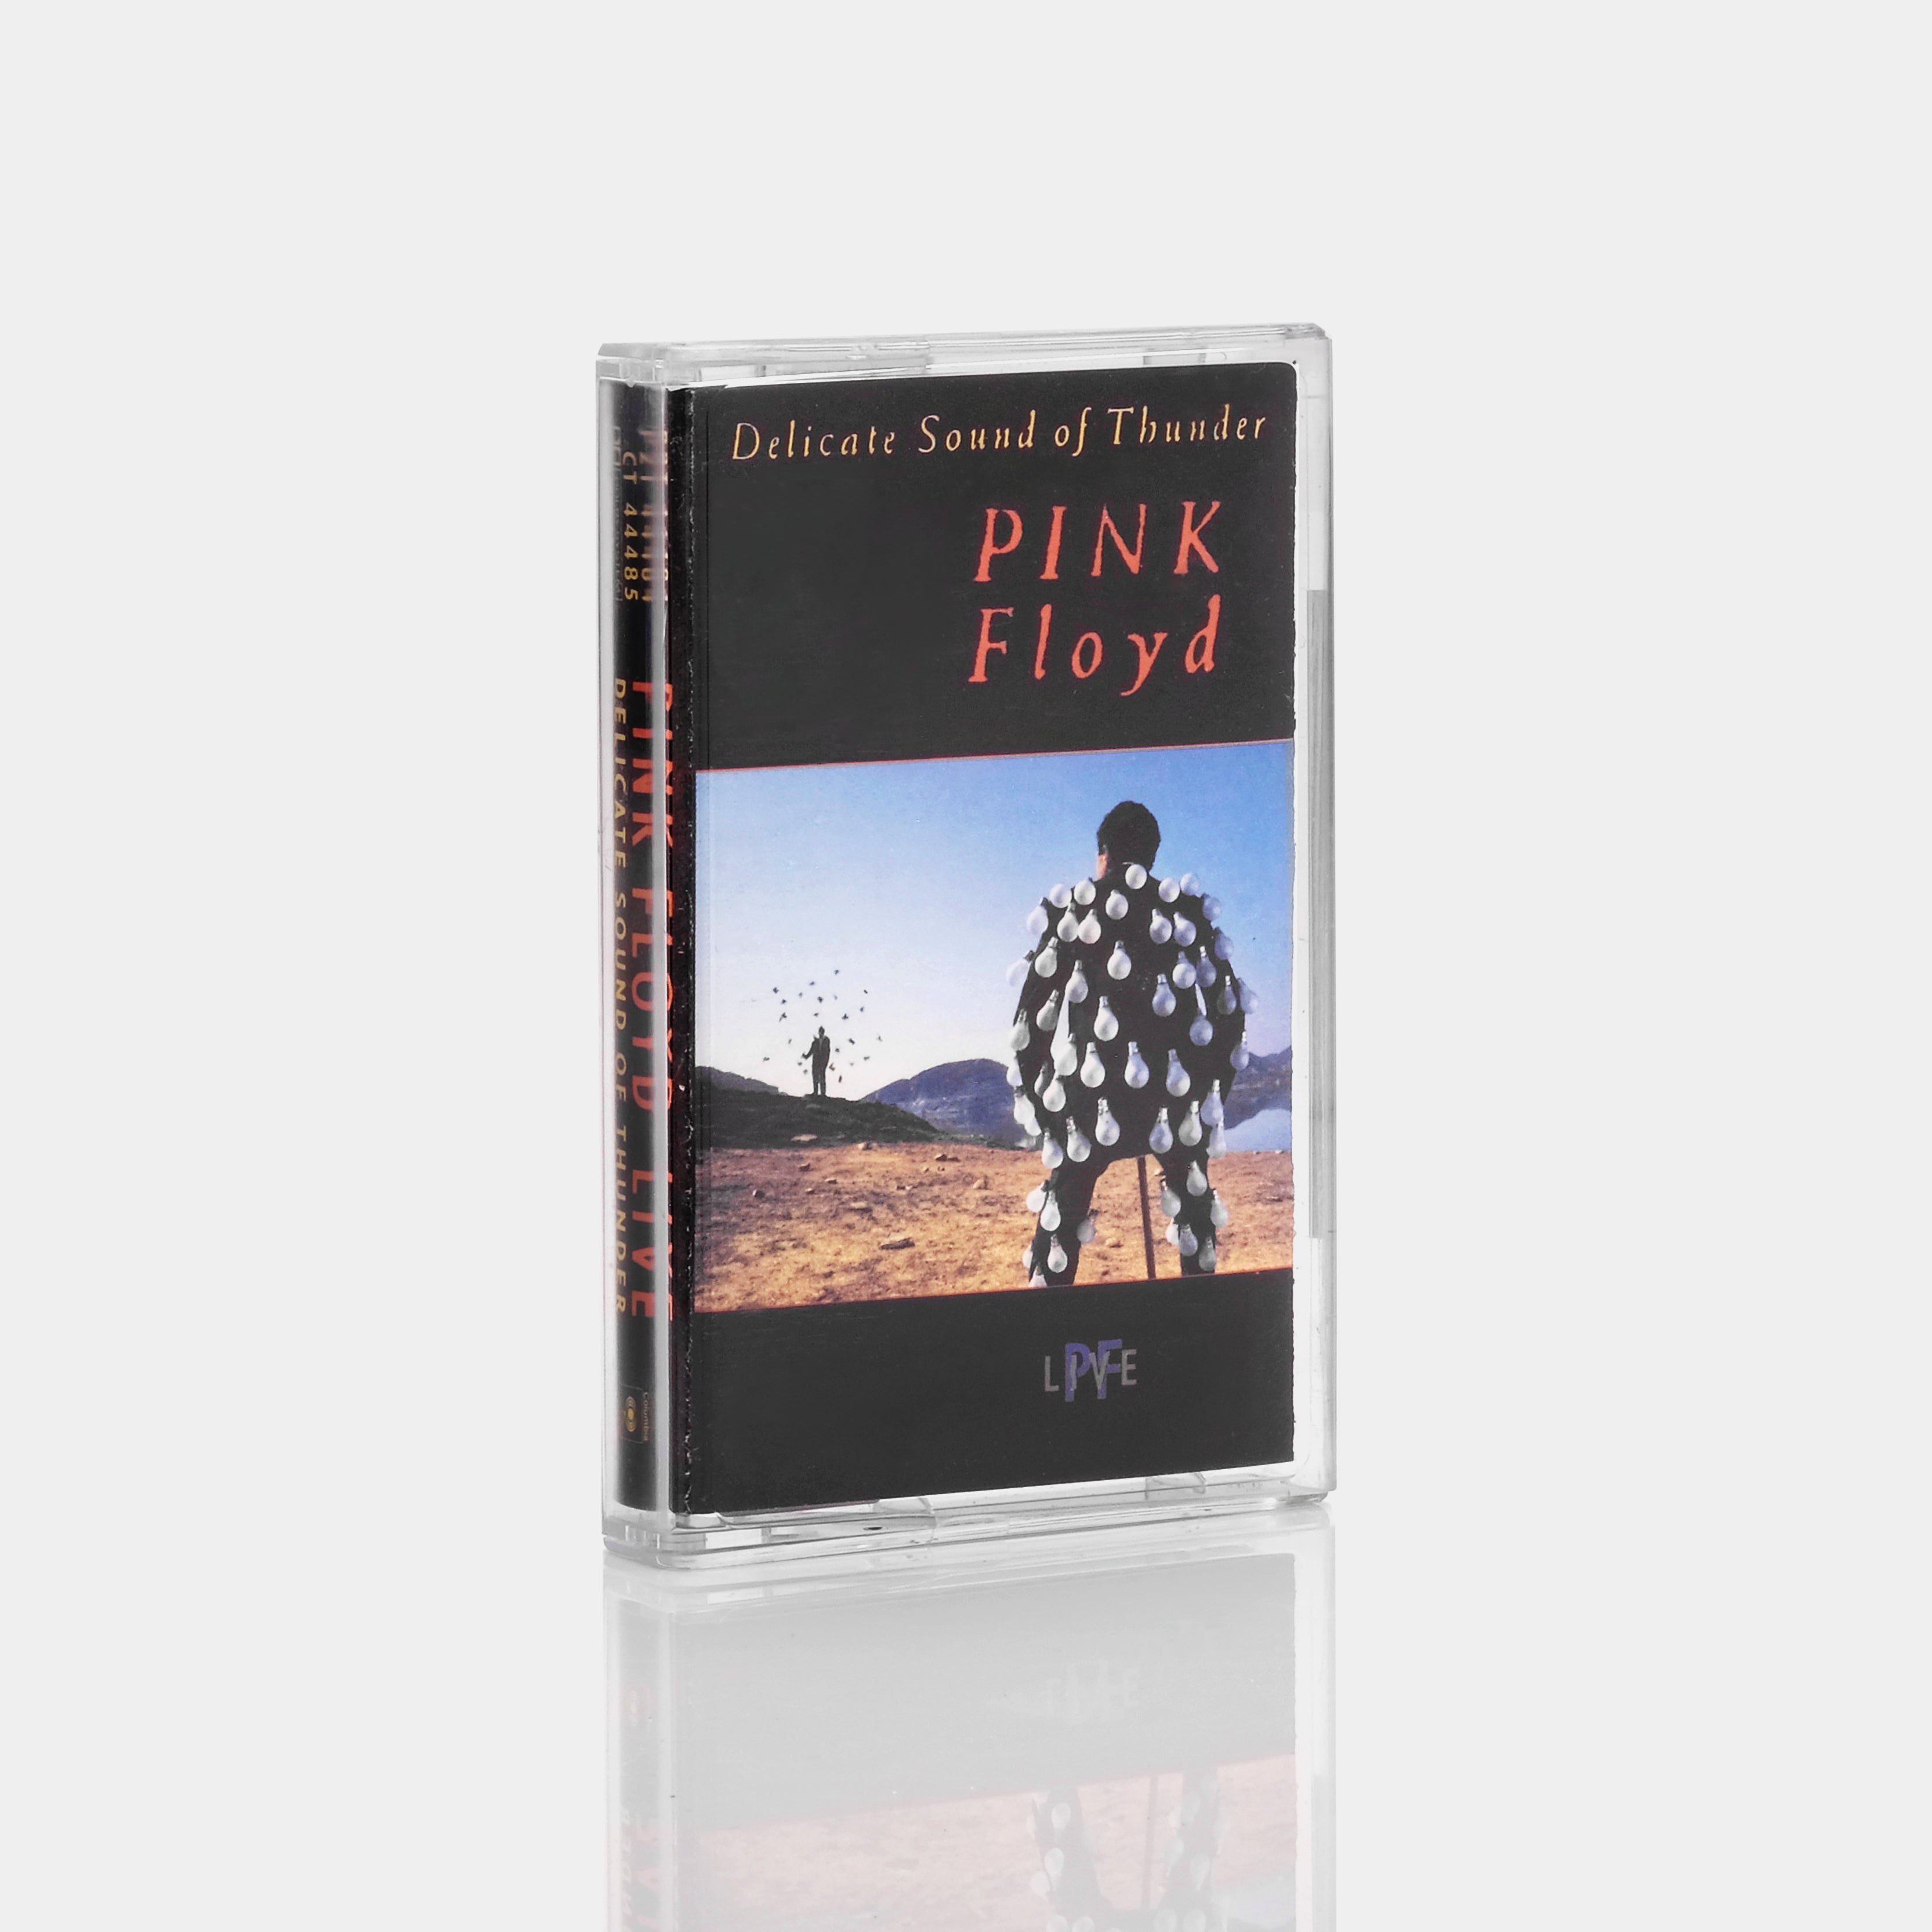 Pink Floyd Delicate Sound of Thunder Audio Cassettes - cds / dvds / vhs -  by owner - electronics media sale - craigslist